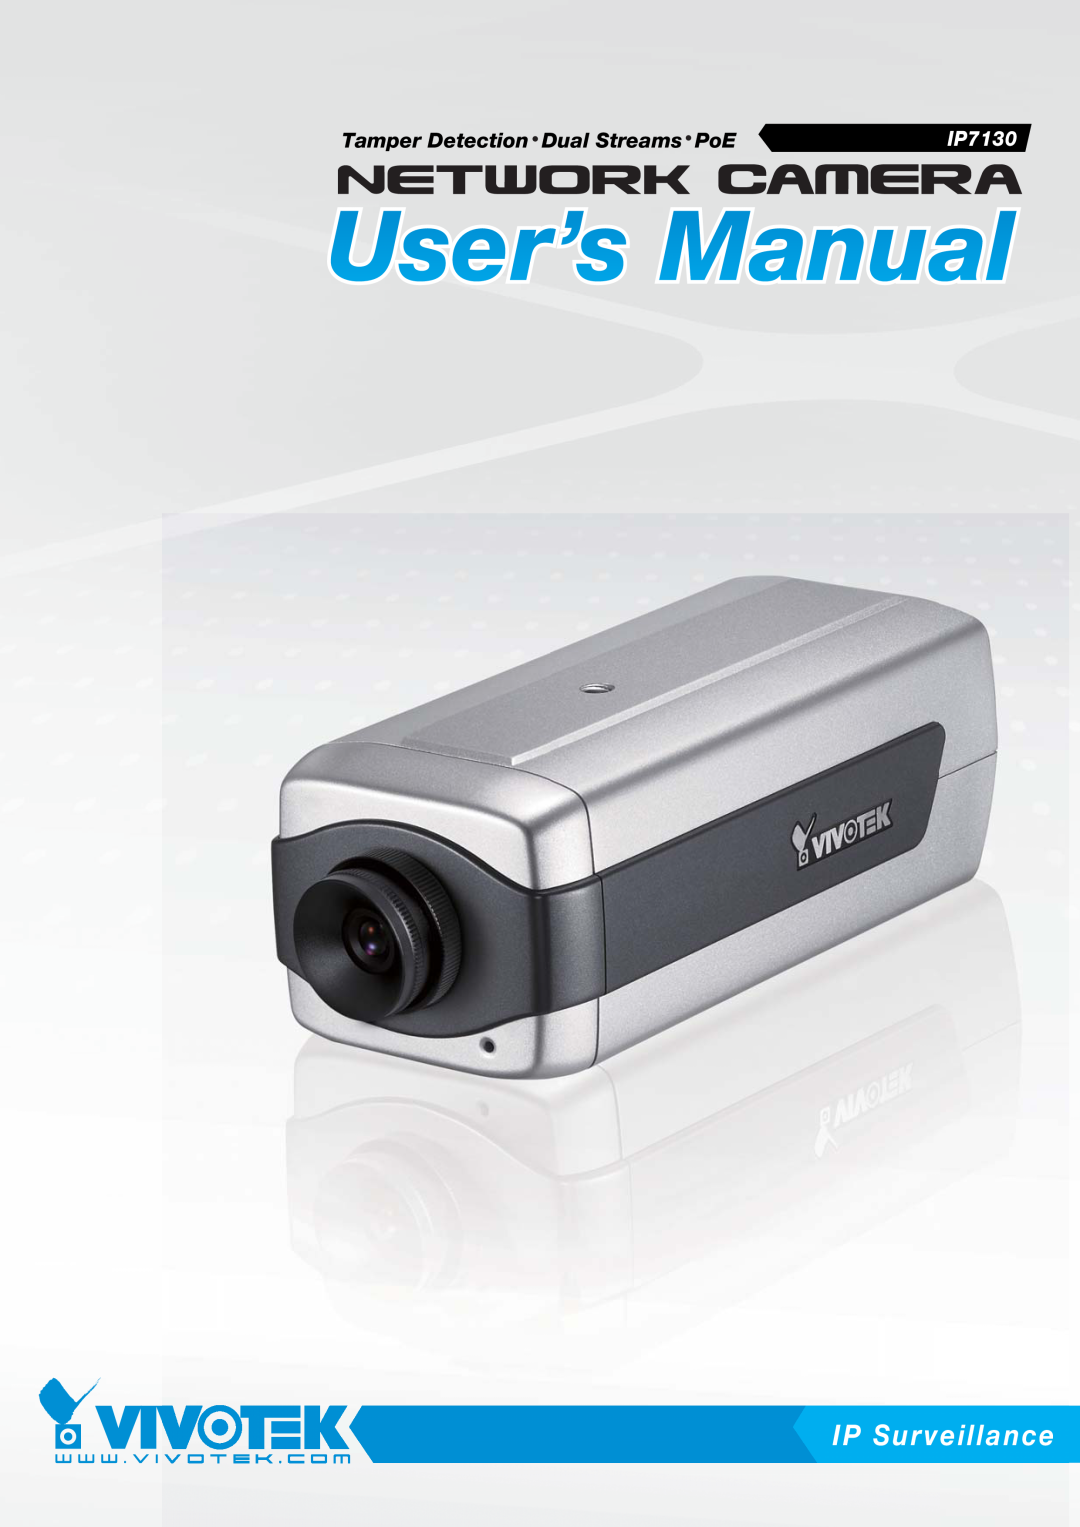 Vivotek IP7130 manual IP Surveillance, Tamper Detection Dual Streams PoE 